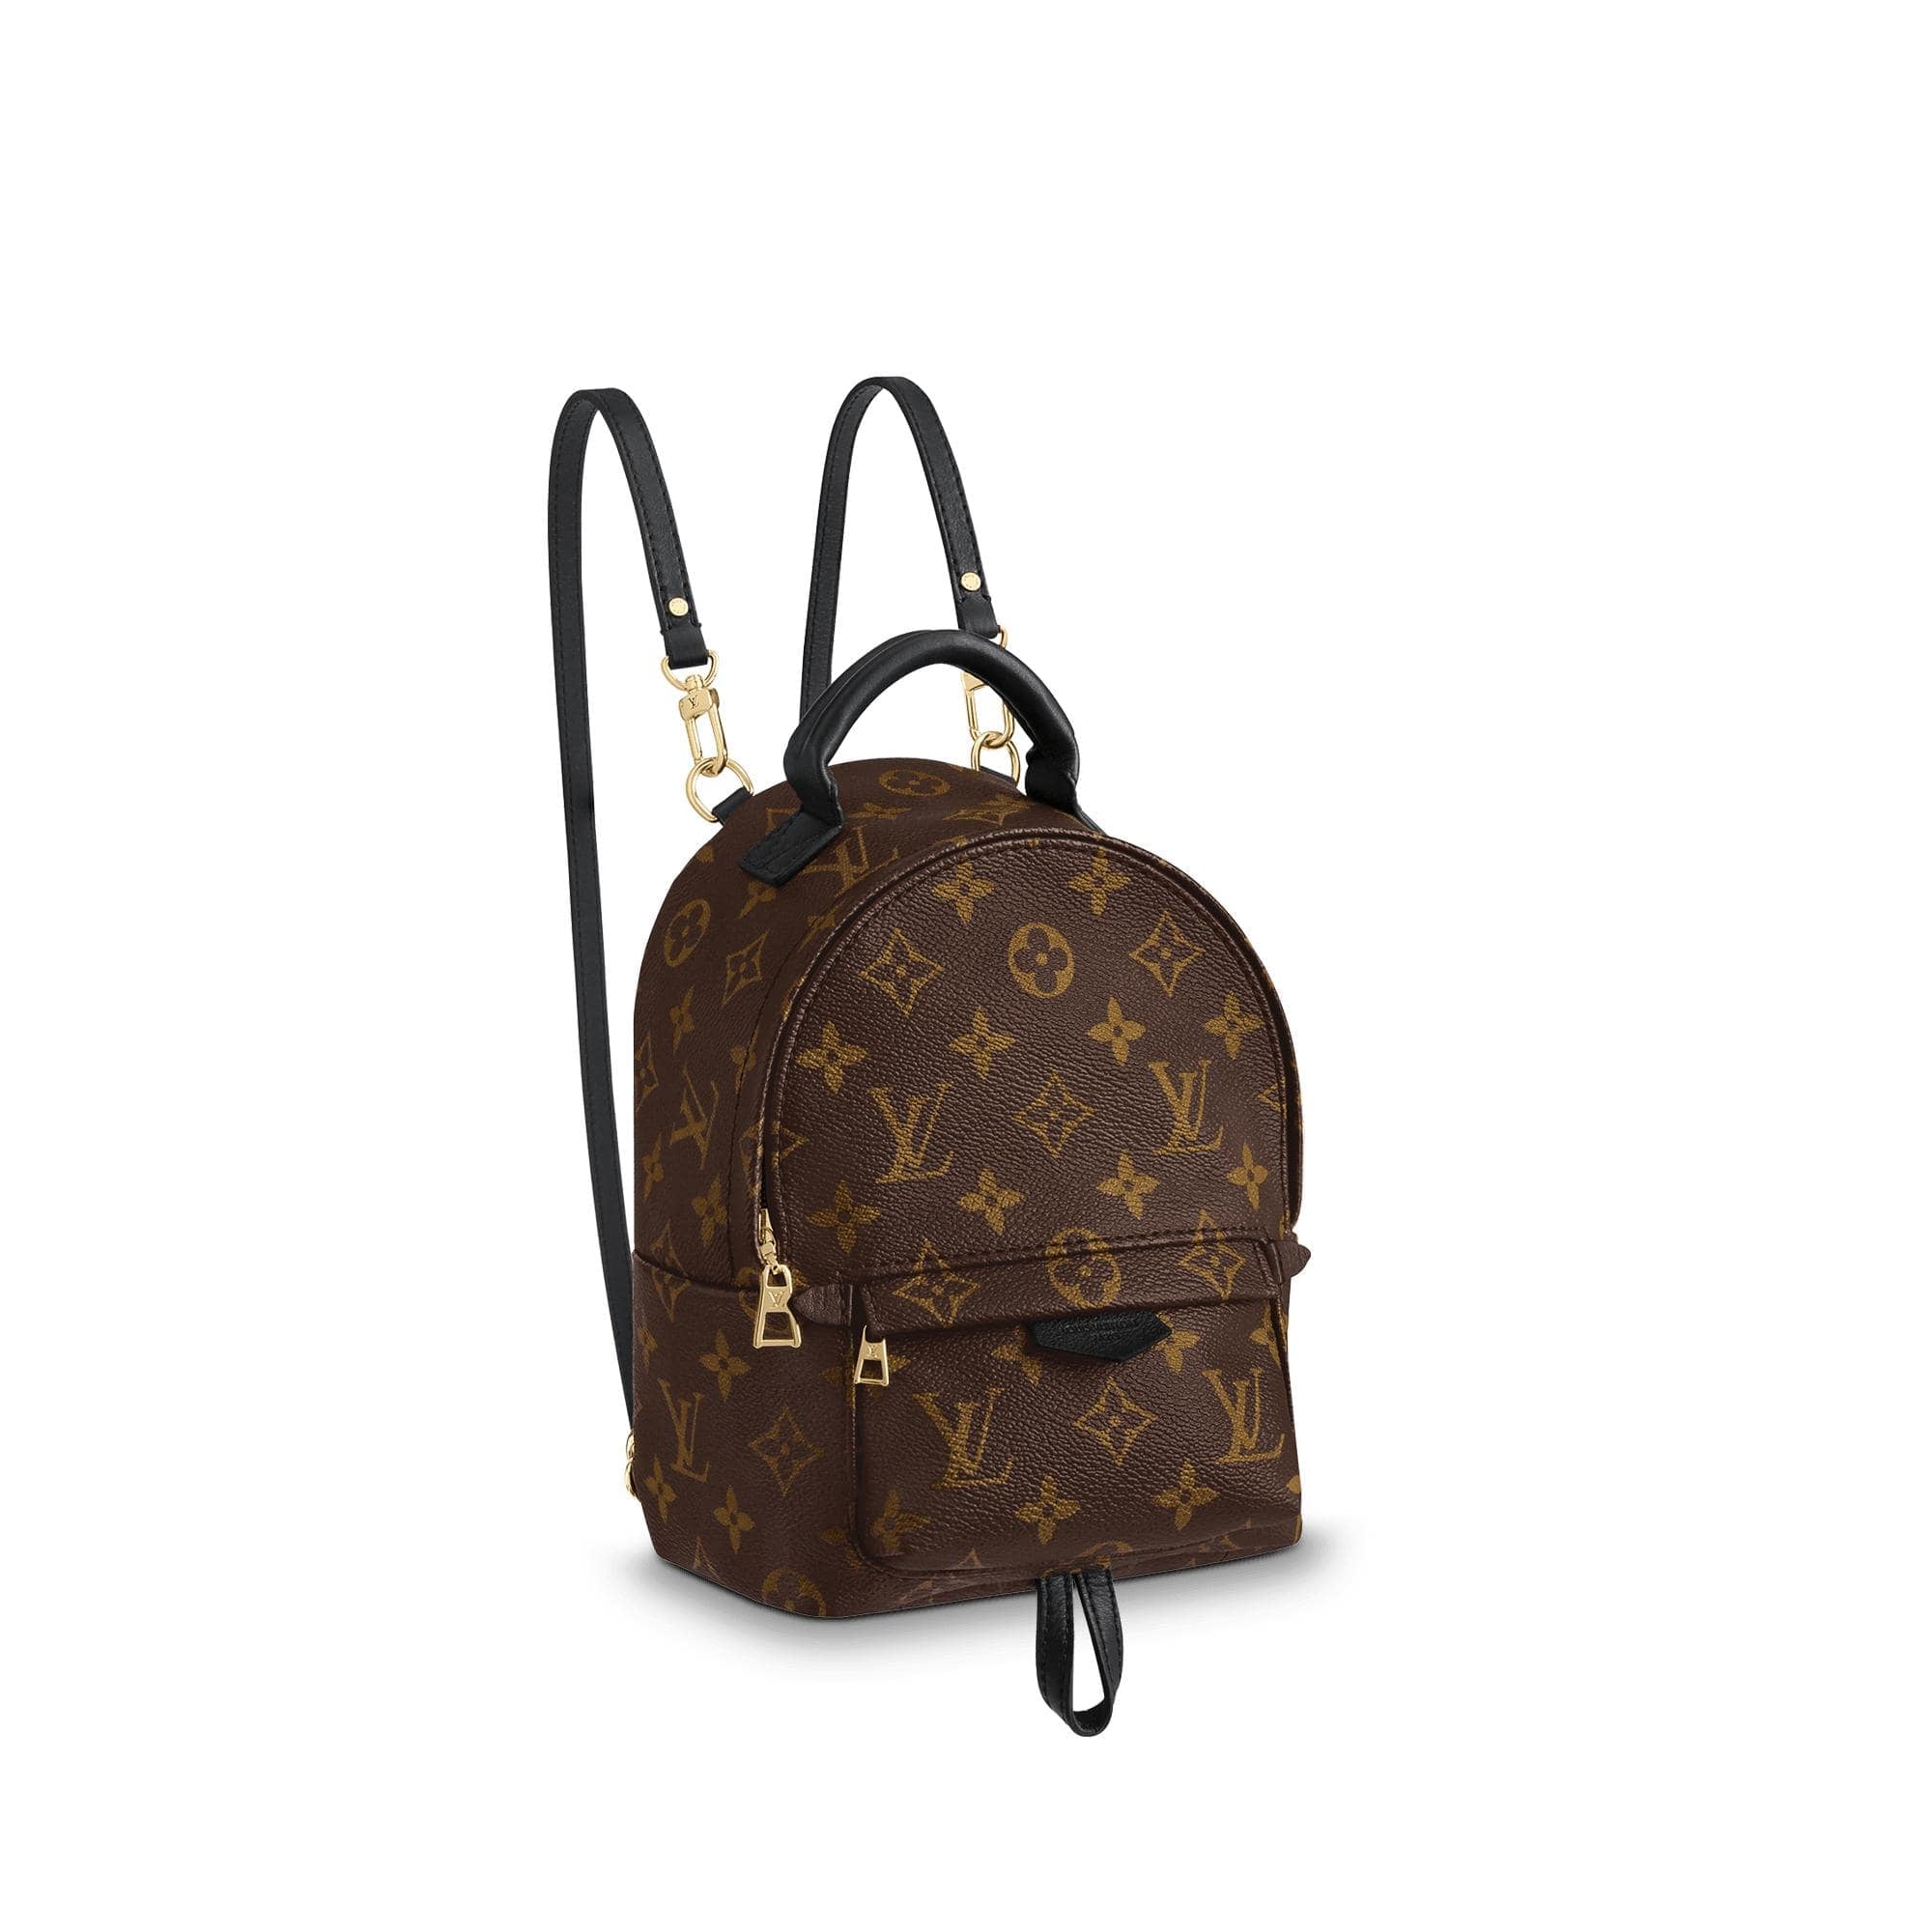 Kourtney's Louis Vuitton Weekender Bag, Try to Keep Up With Kourtney  Kardashian's Massive Designer Bag Collection